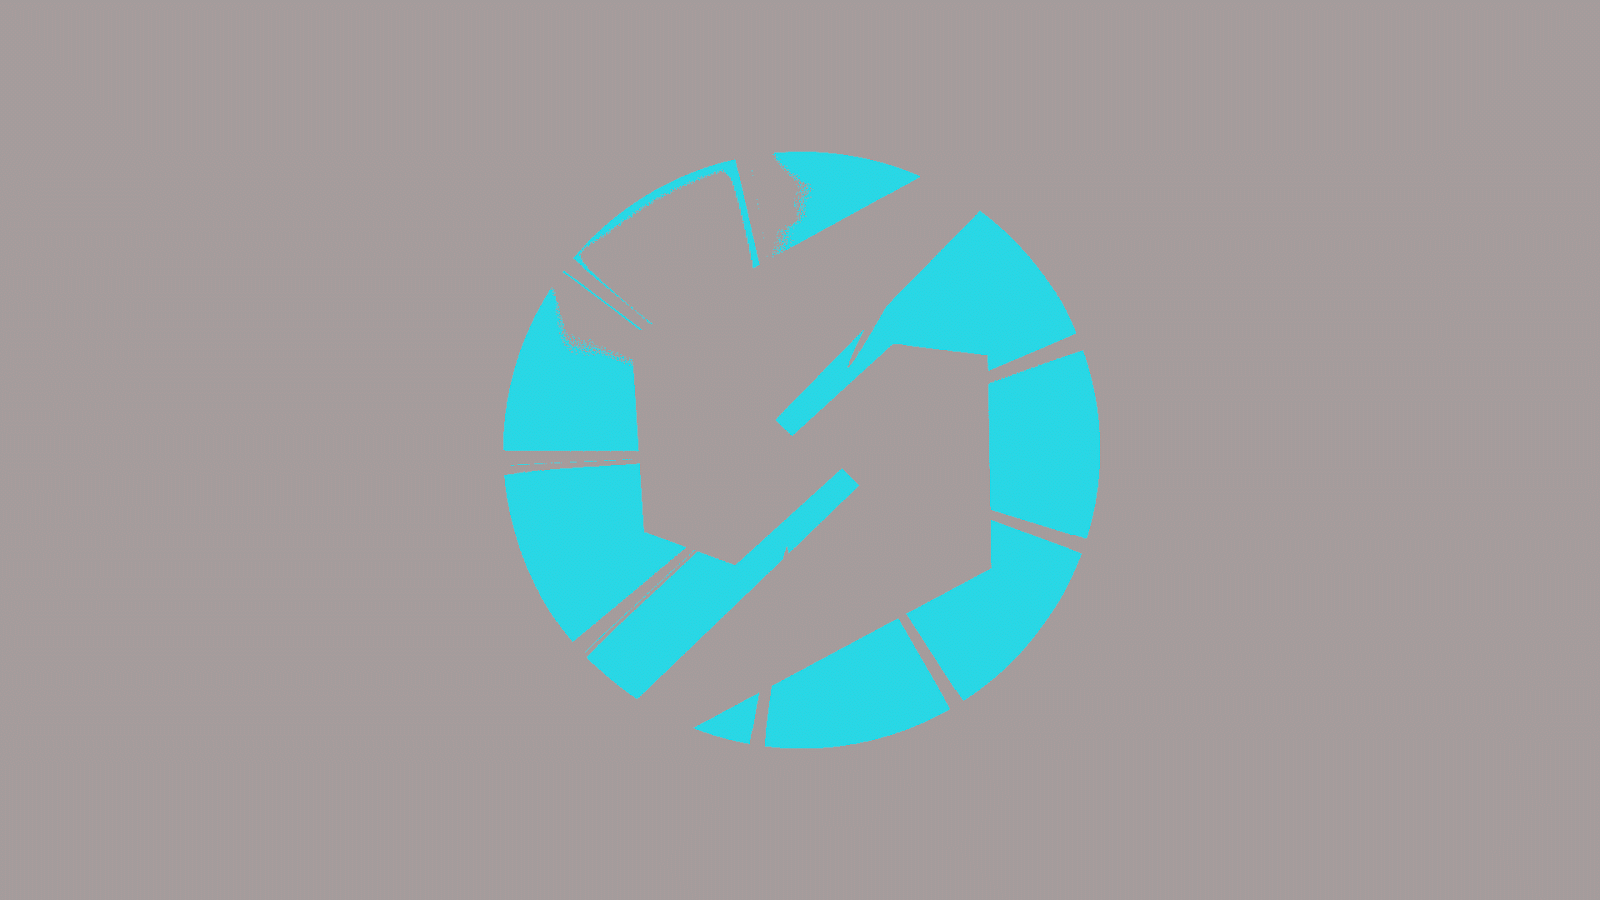 Cool S Logo - SH Ali : Click on S logo